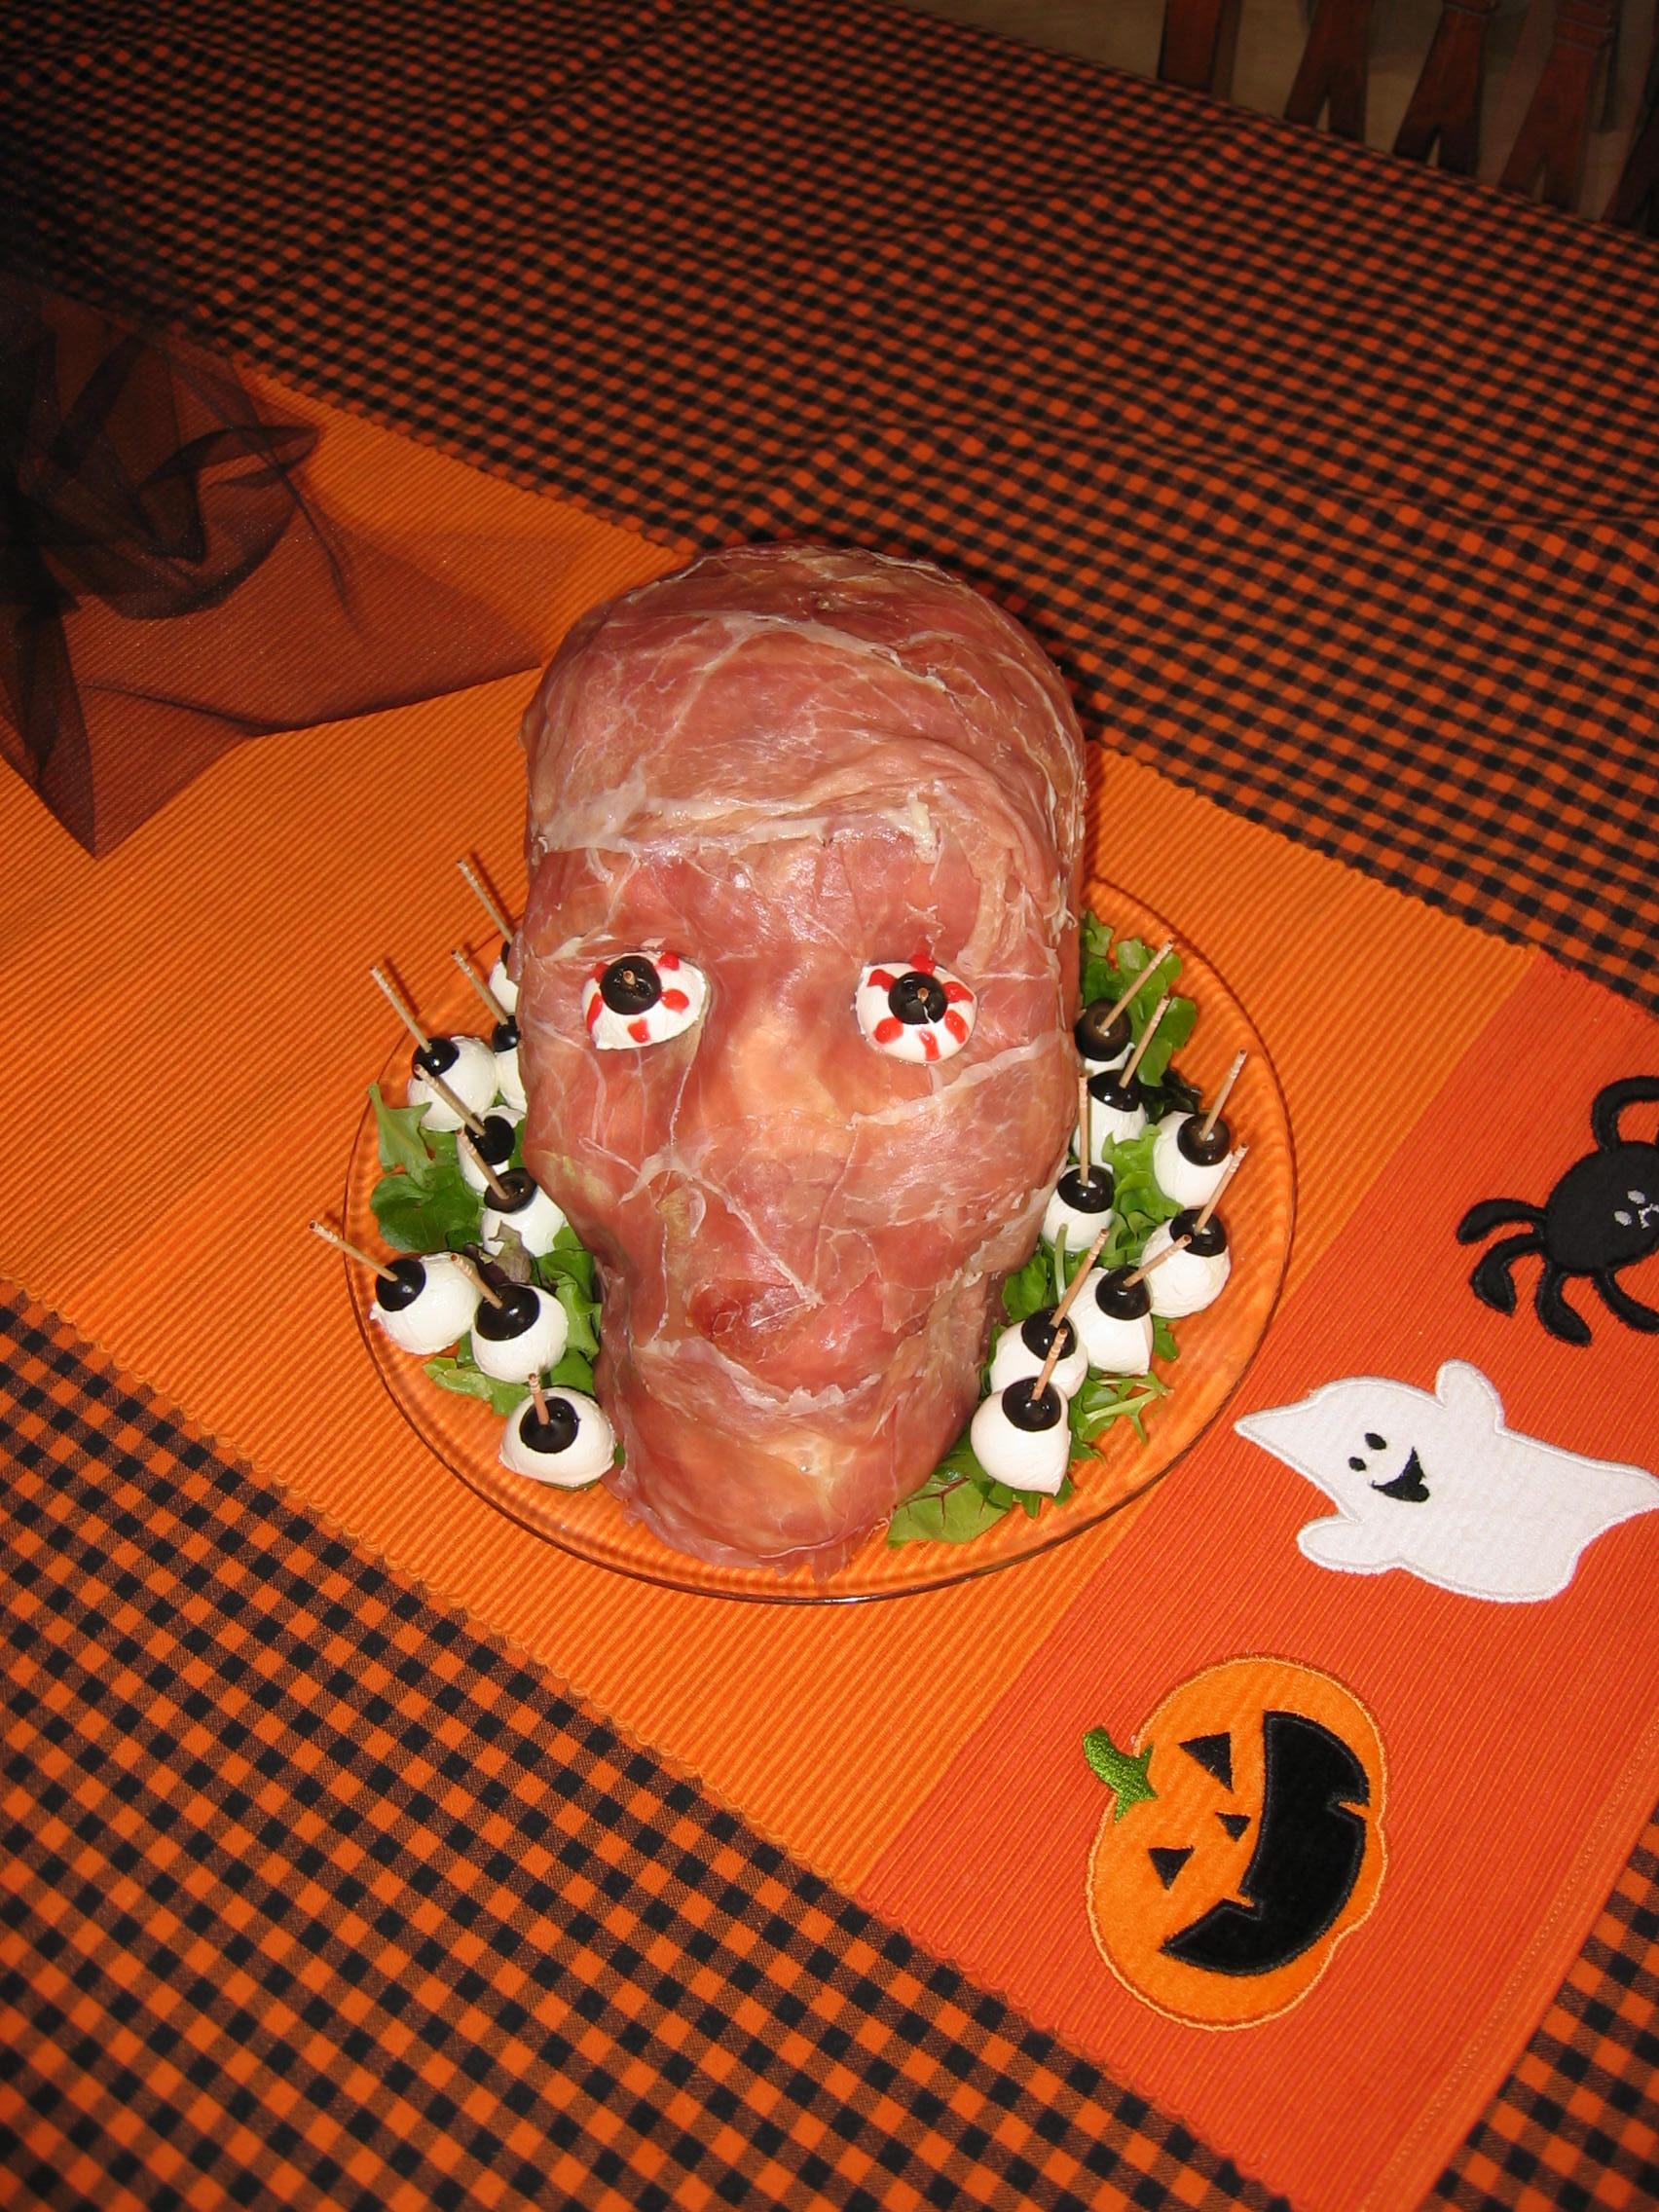 Fun Halloween Party Food Recipes – Prosciutto Ham Head & Pillsbury Spooky Finger Breadsticks